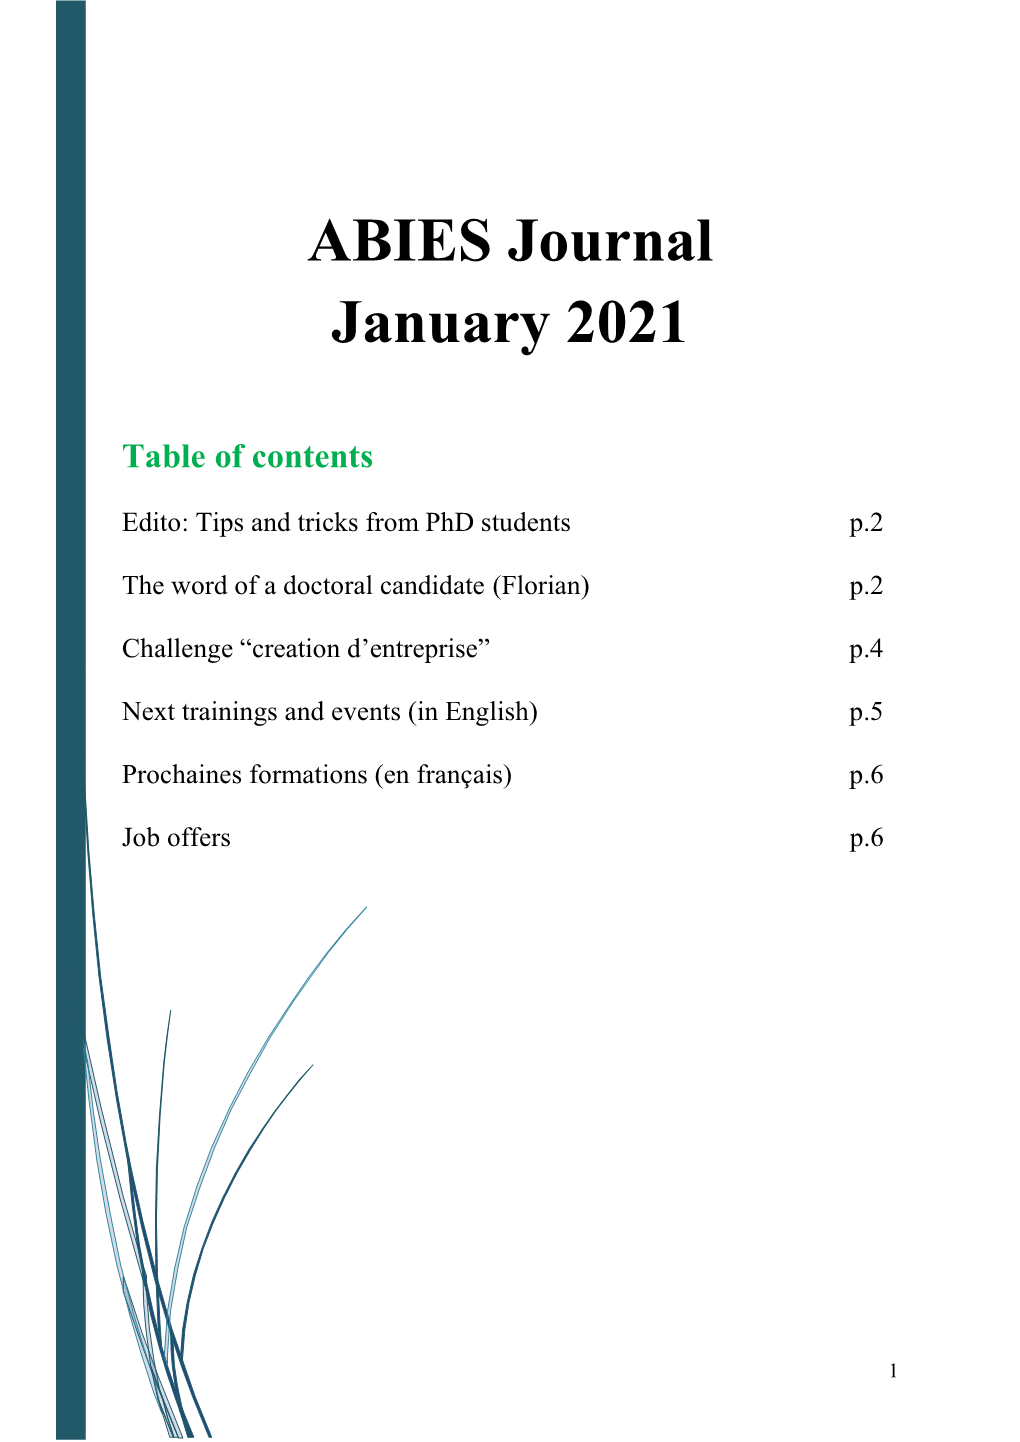 ABIES Journal January 2021